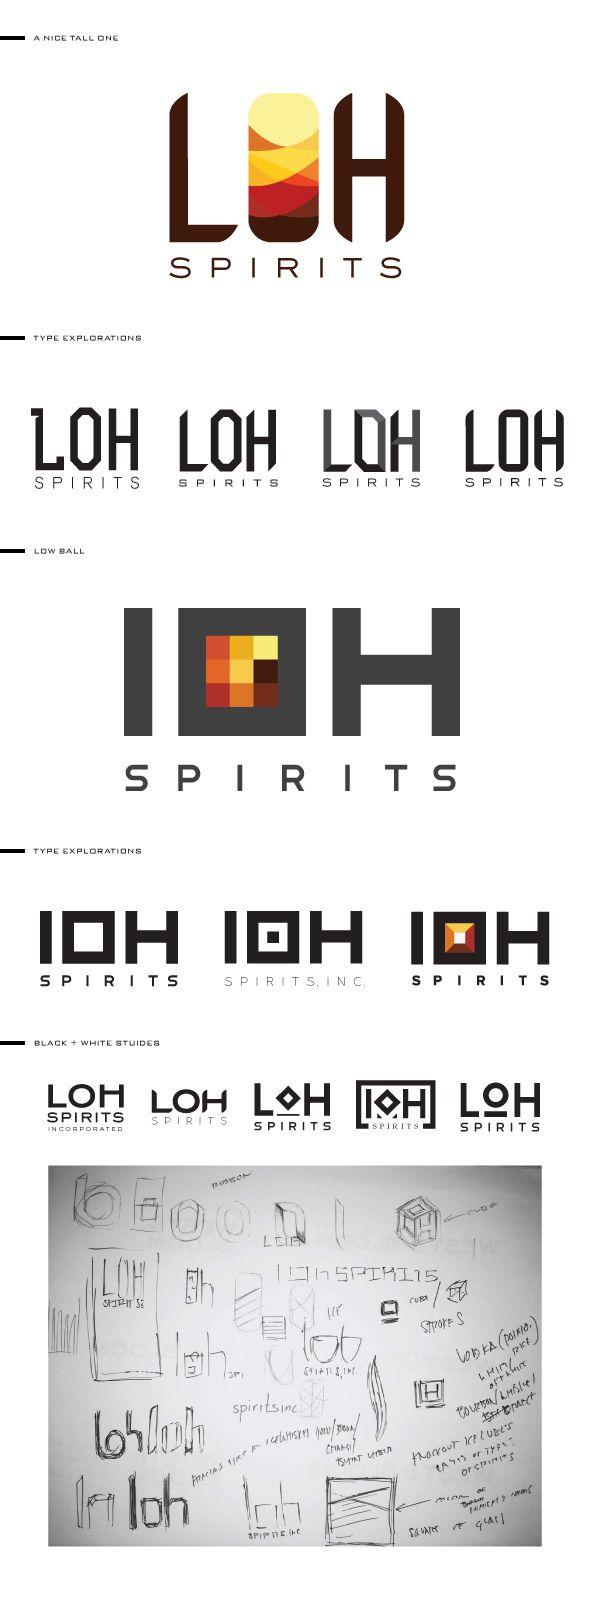 Alcohol Company Logo - loh SPIRITS. Alcohol Distribution Company Logo Design